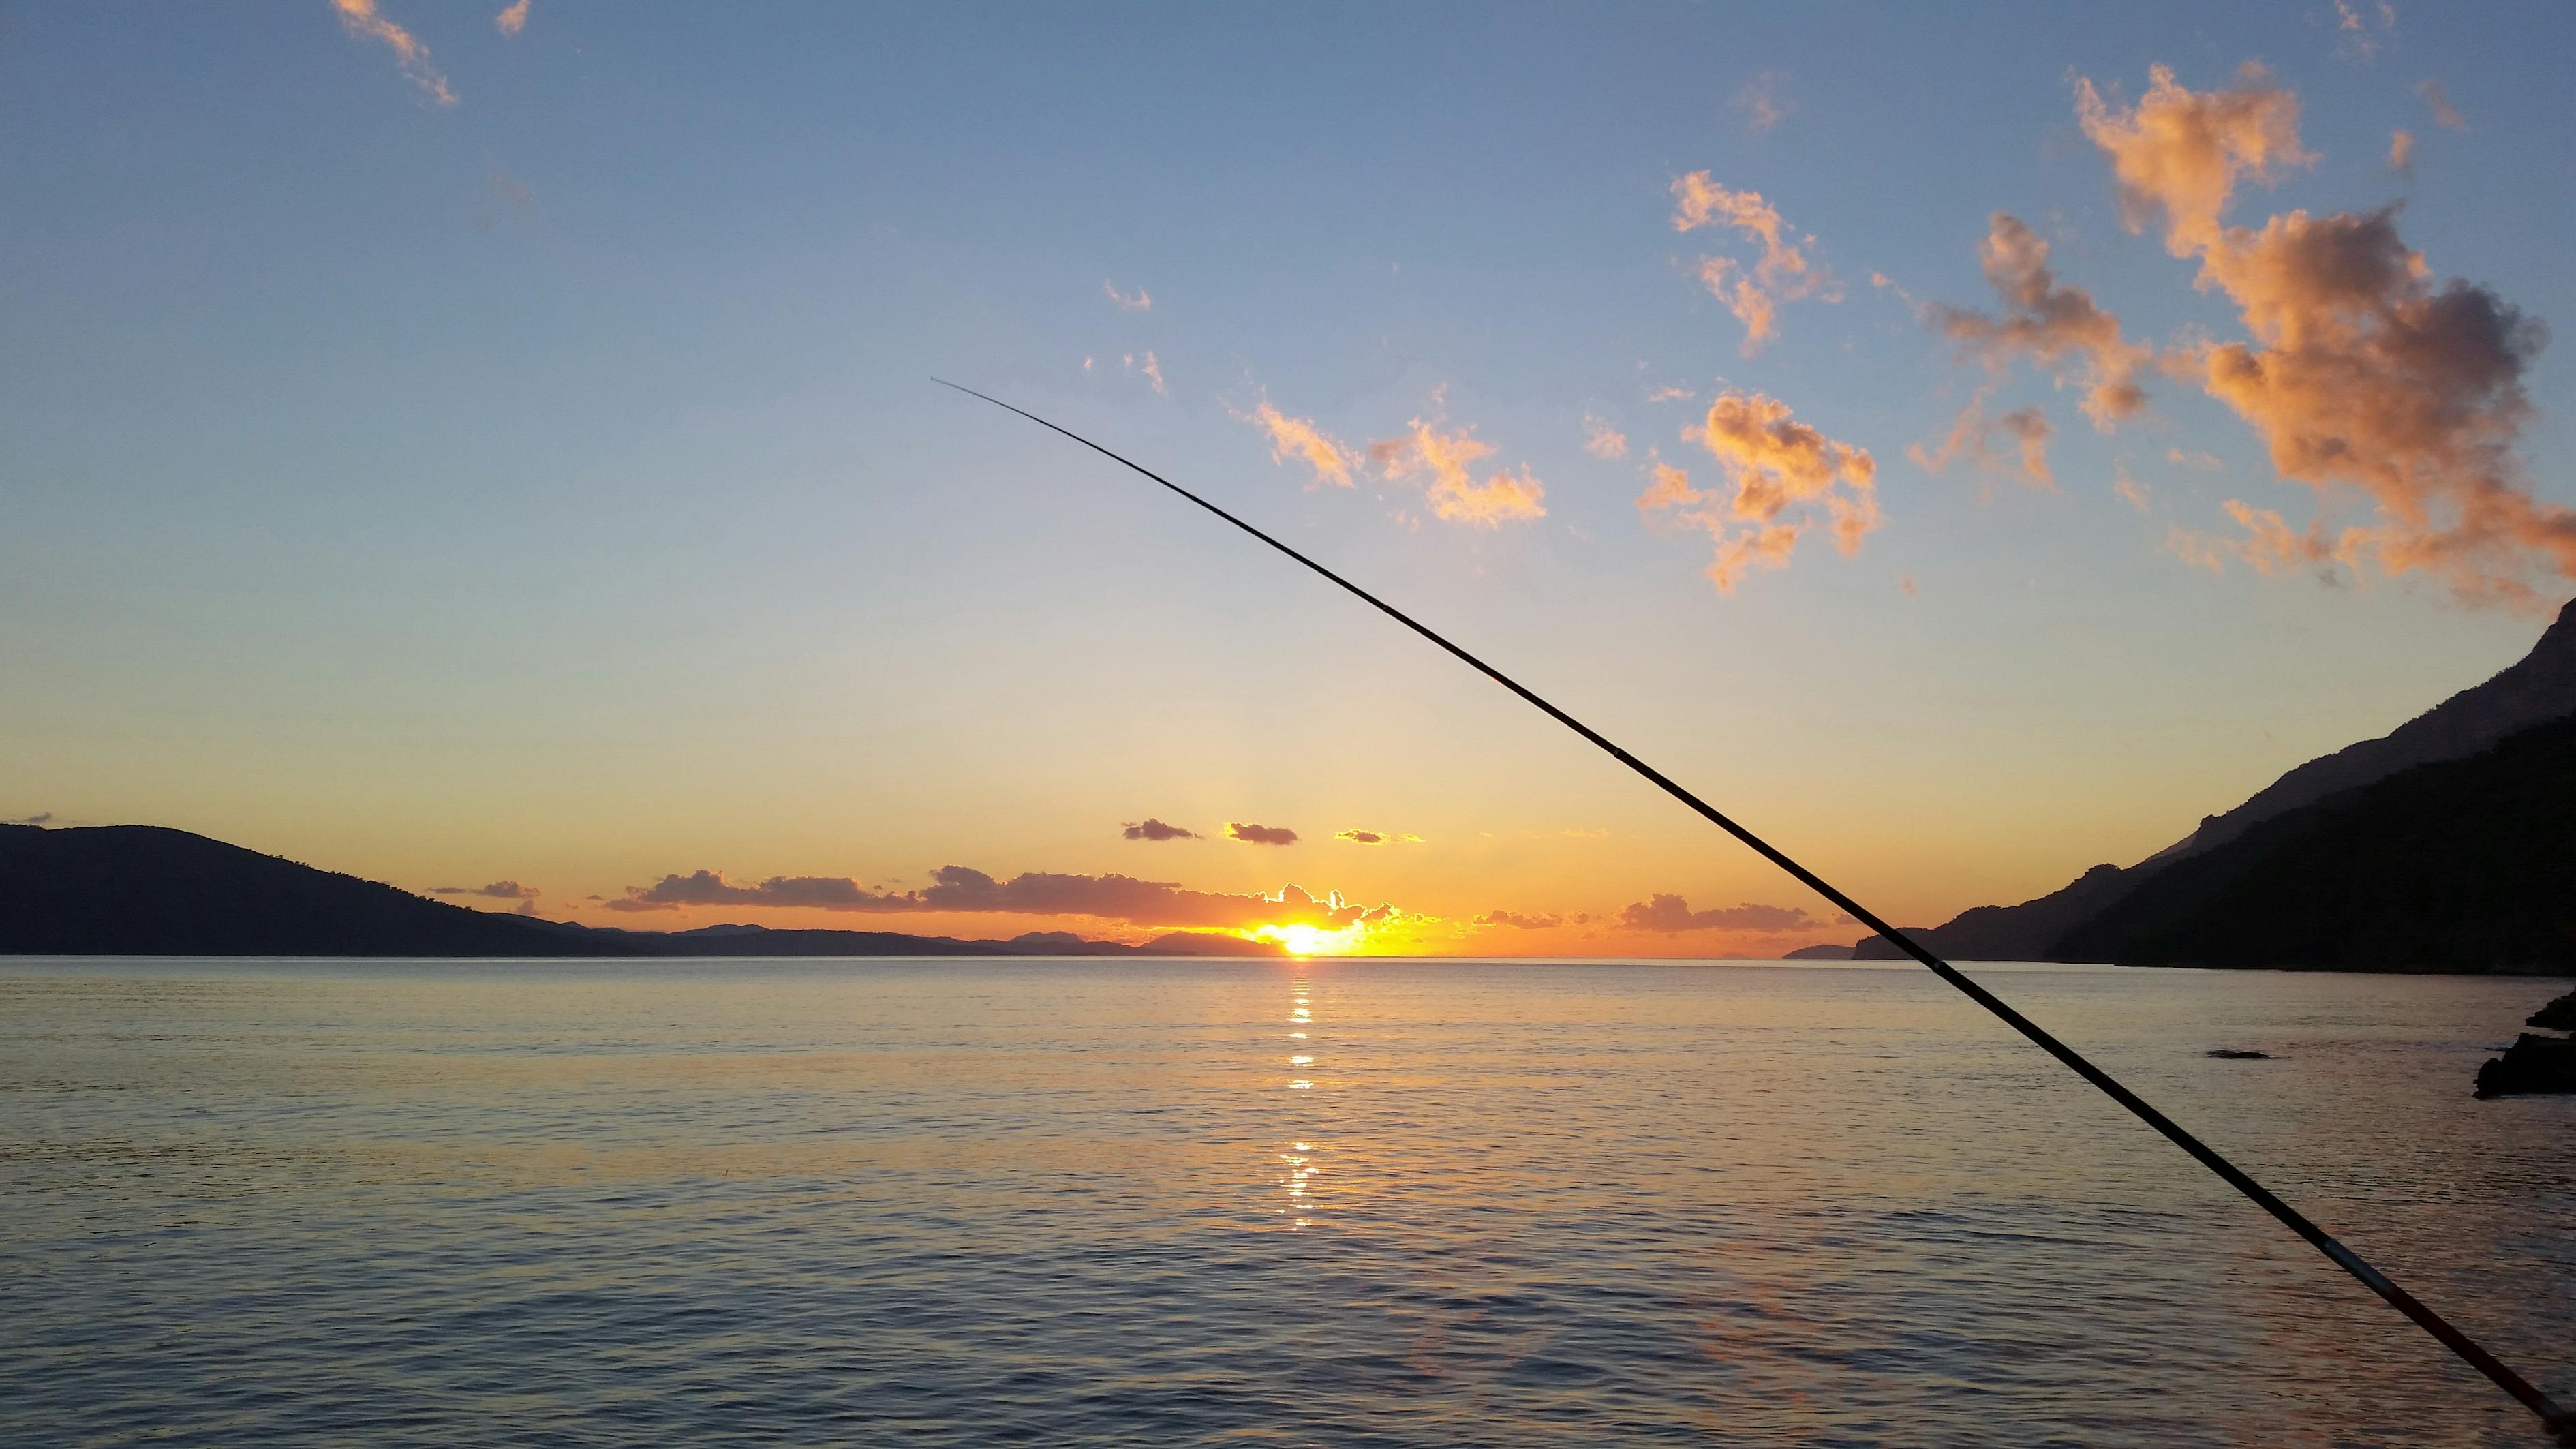 Fishing rod near body of water